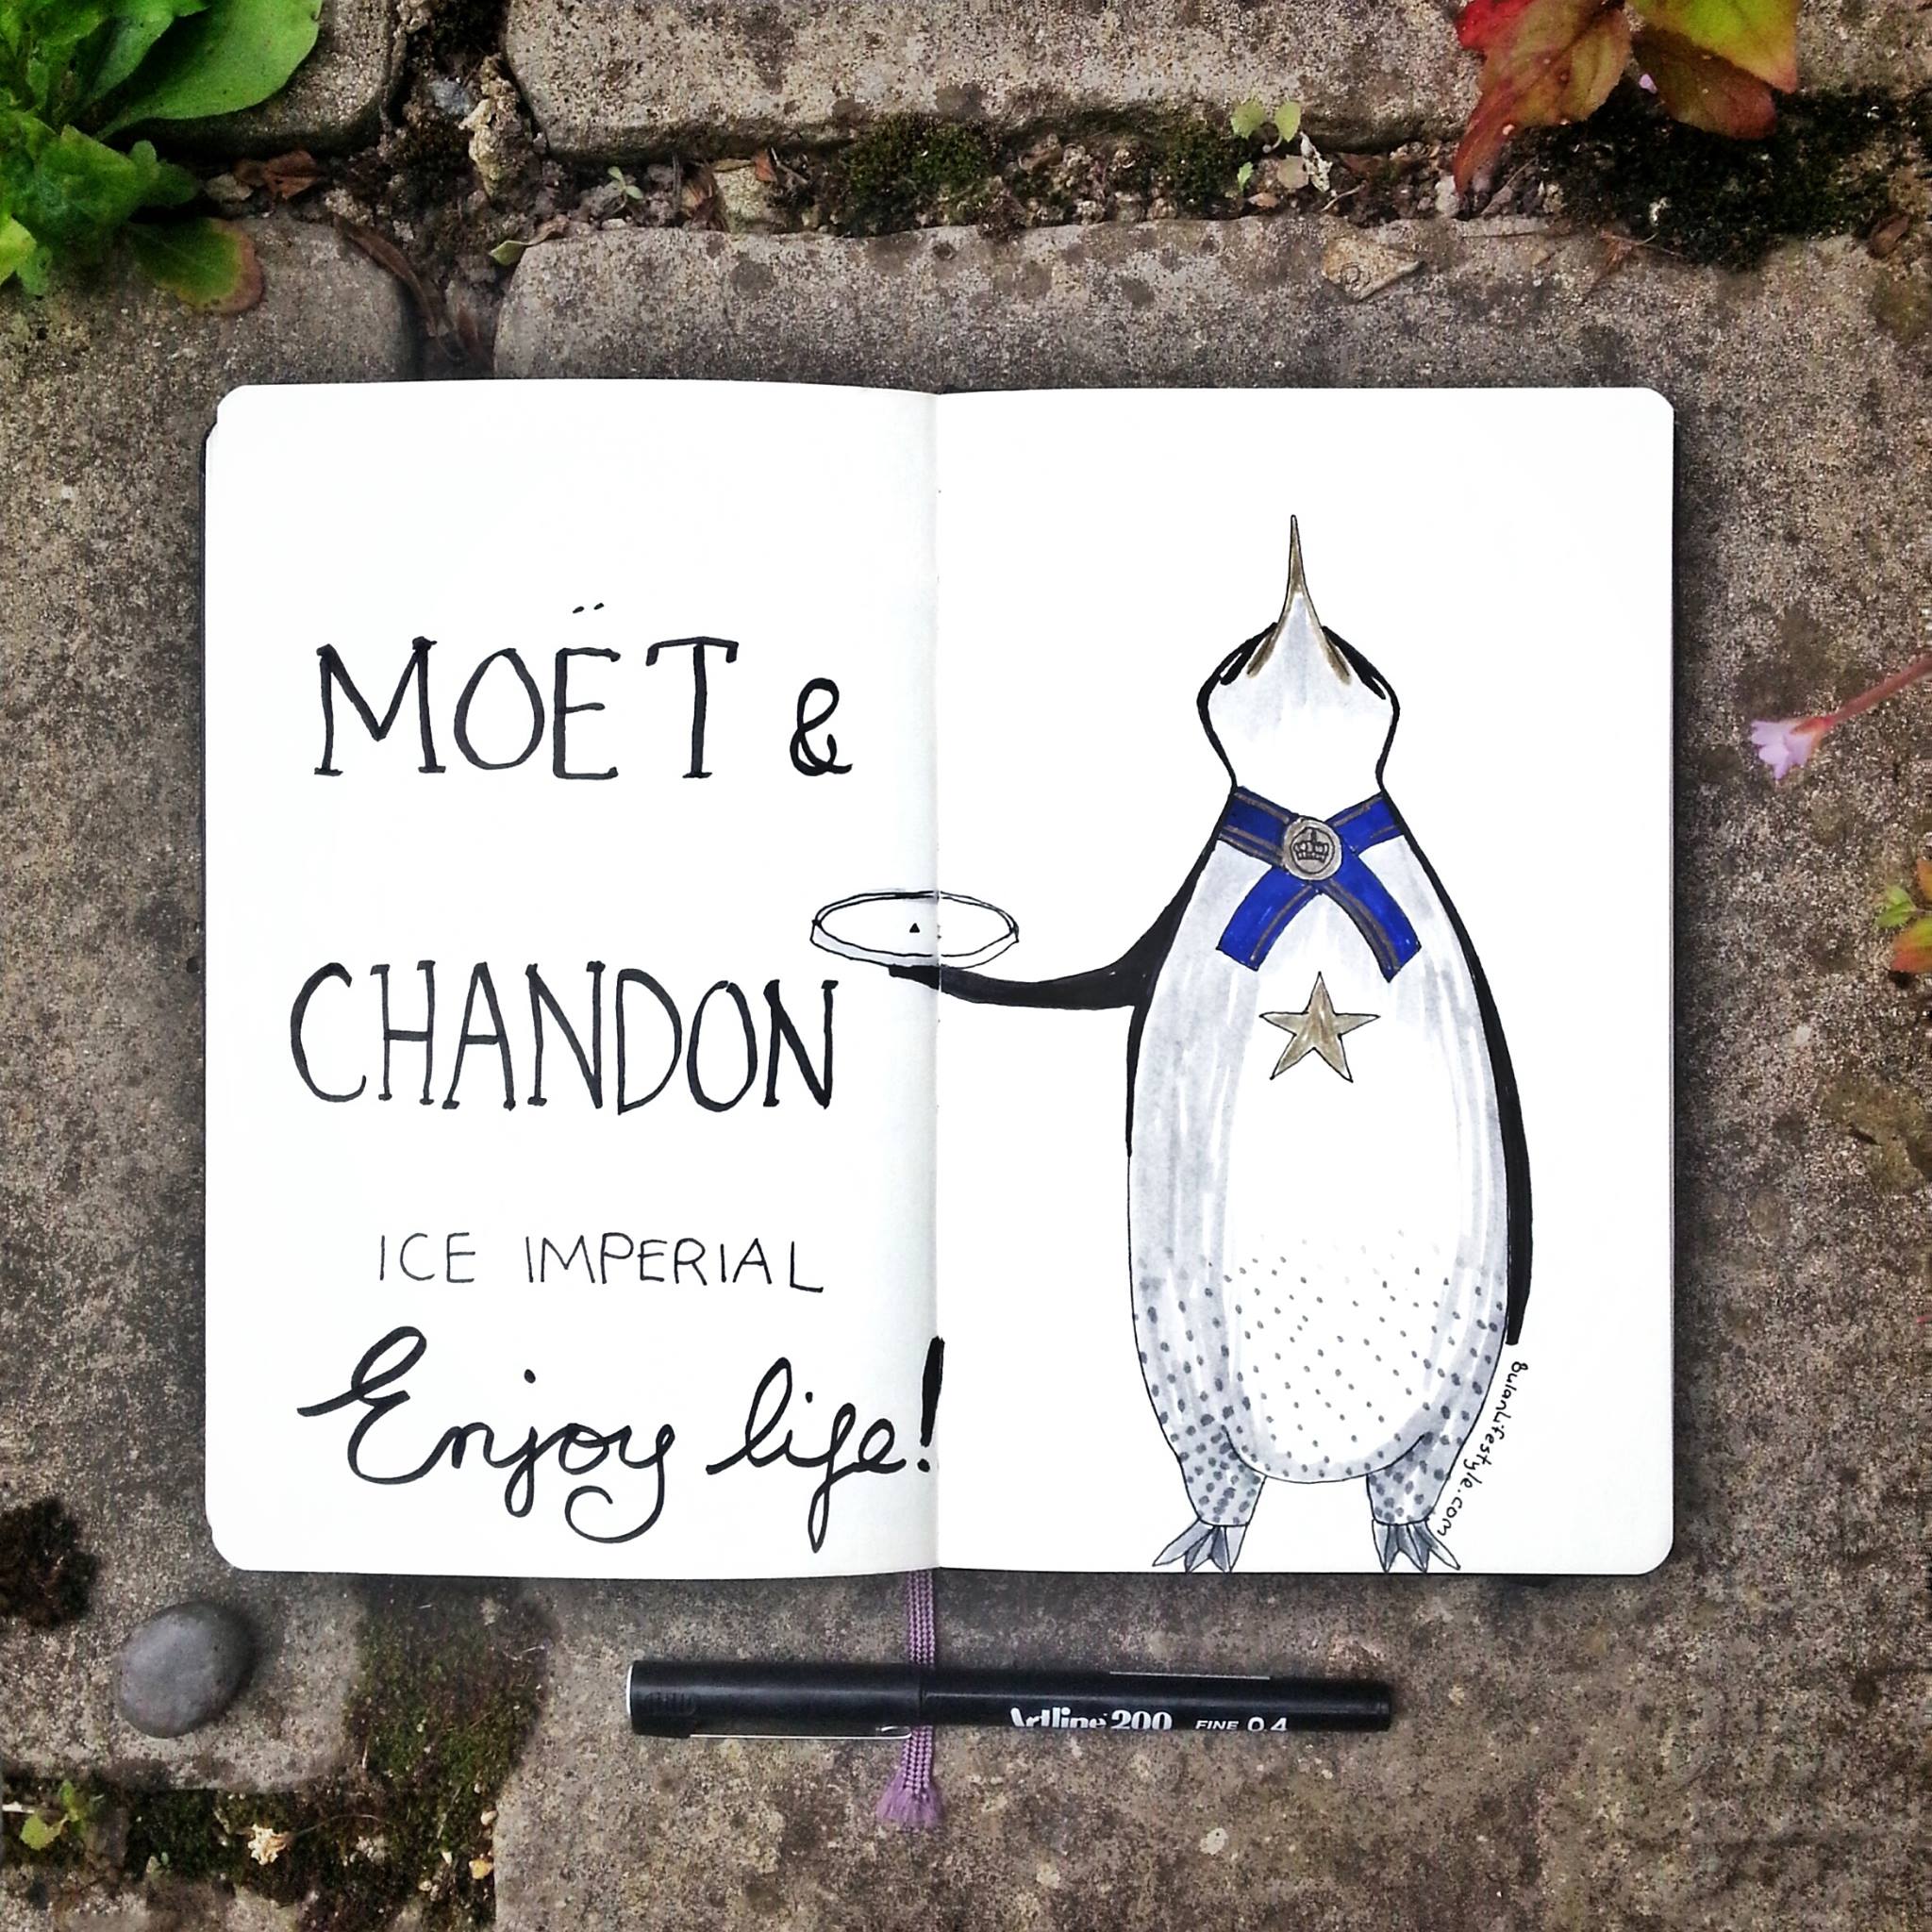 Moet & Chandon penguin.